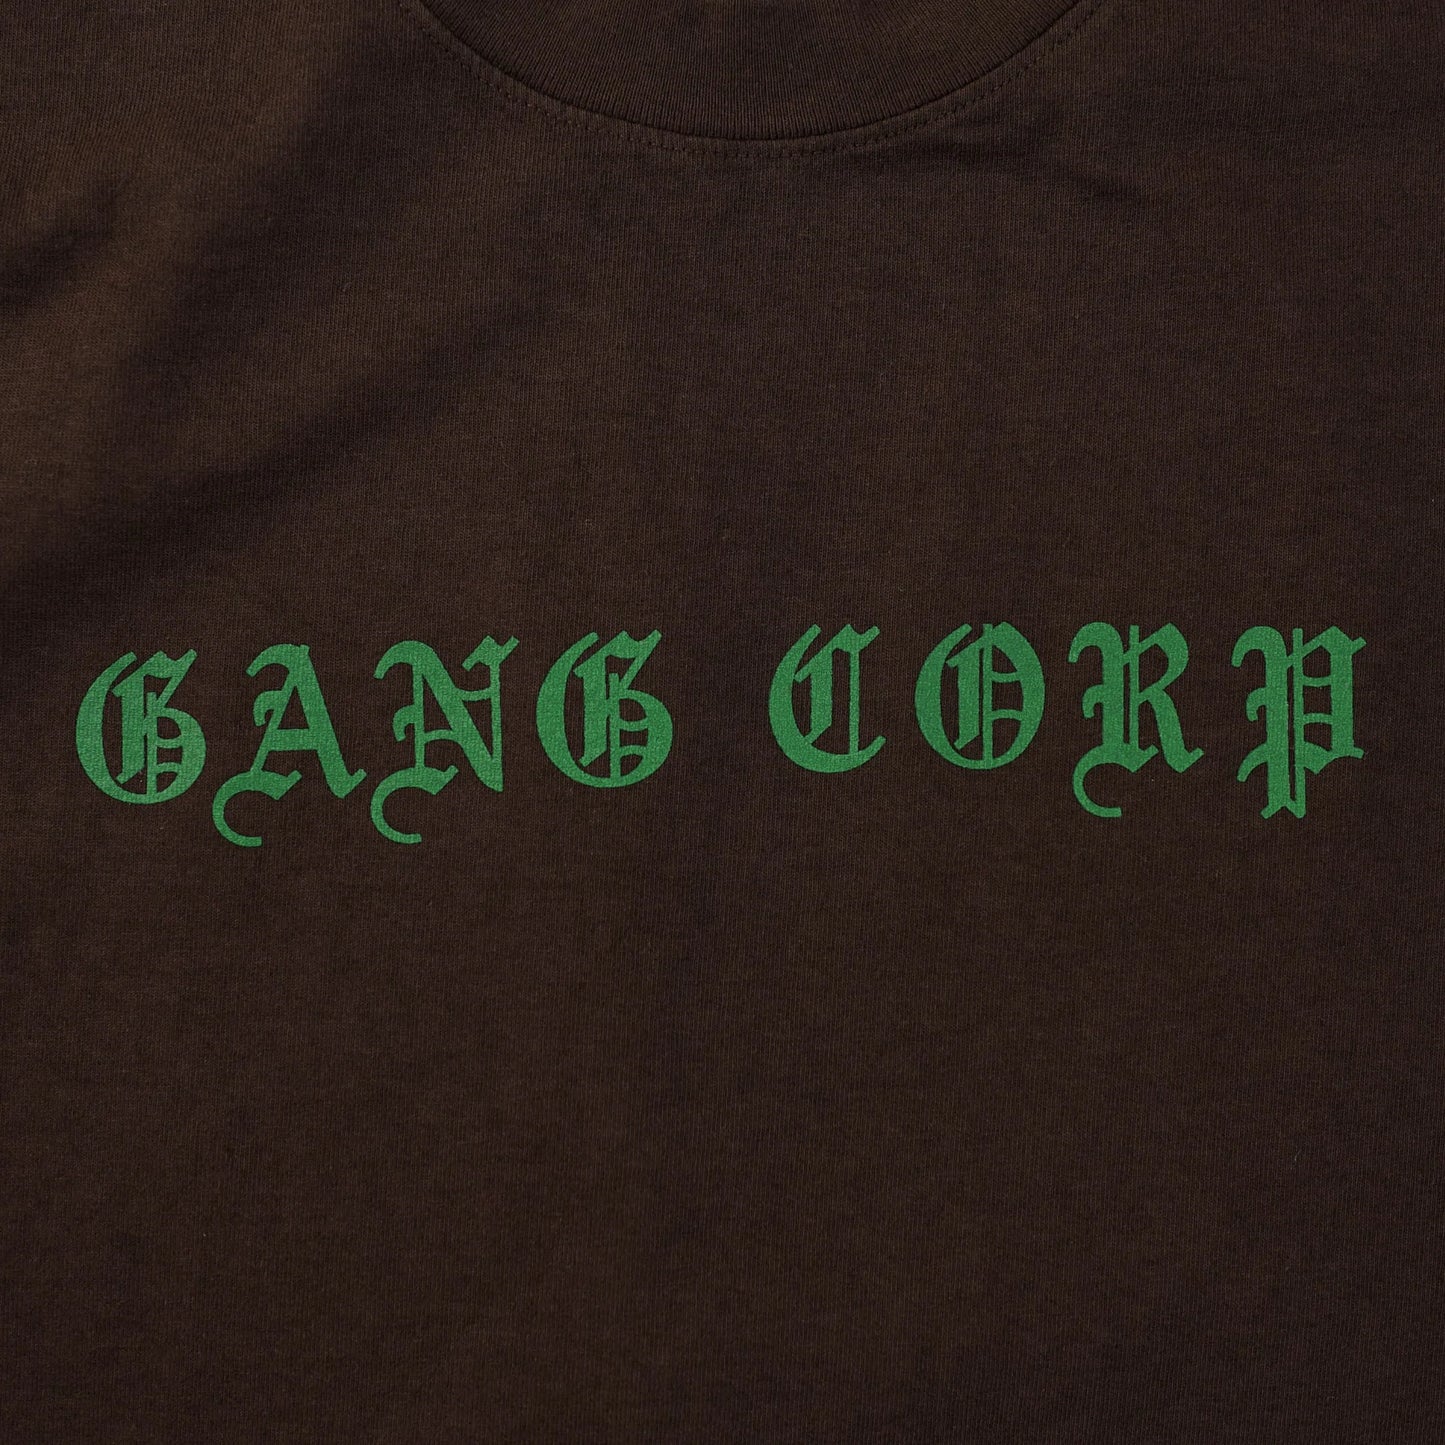 Gang Corp Old English Logo Tee Brown